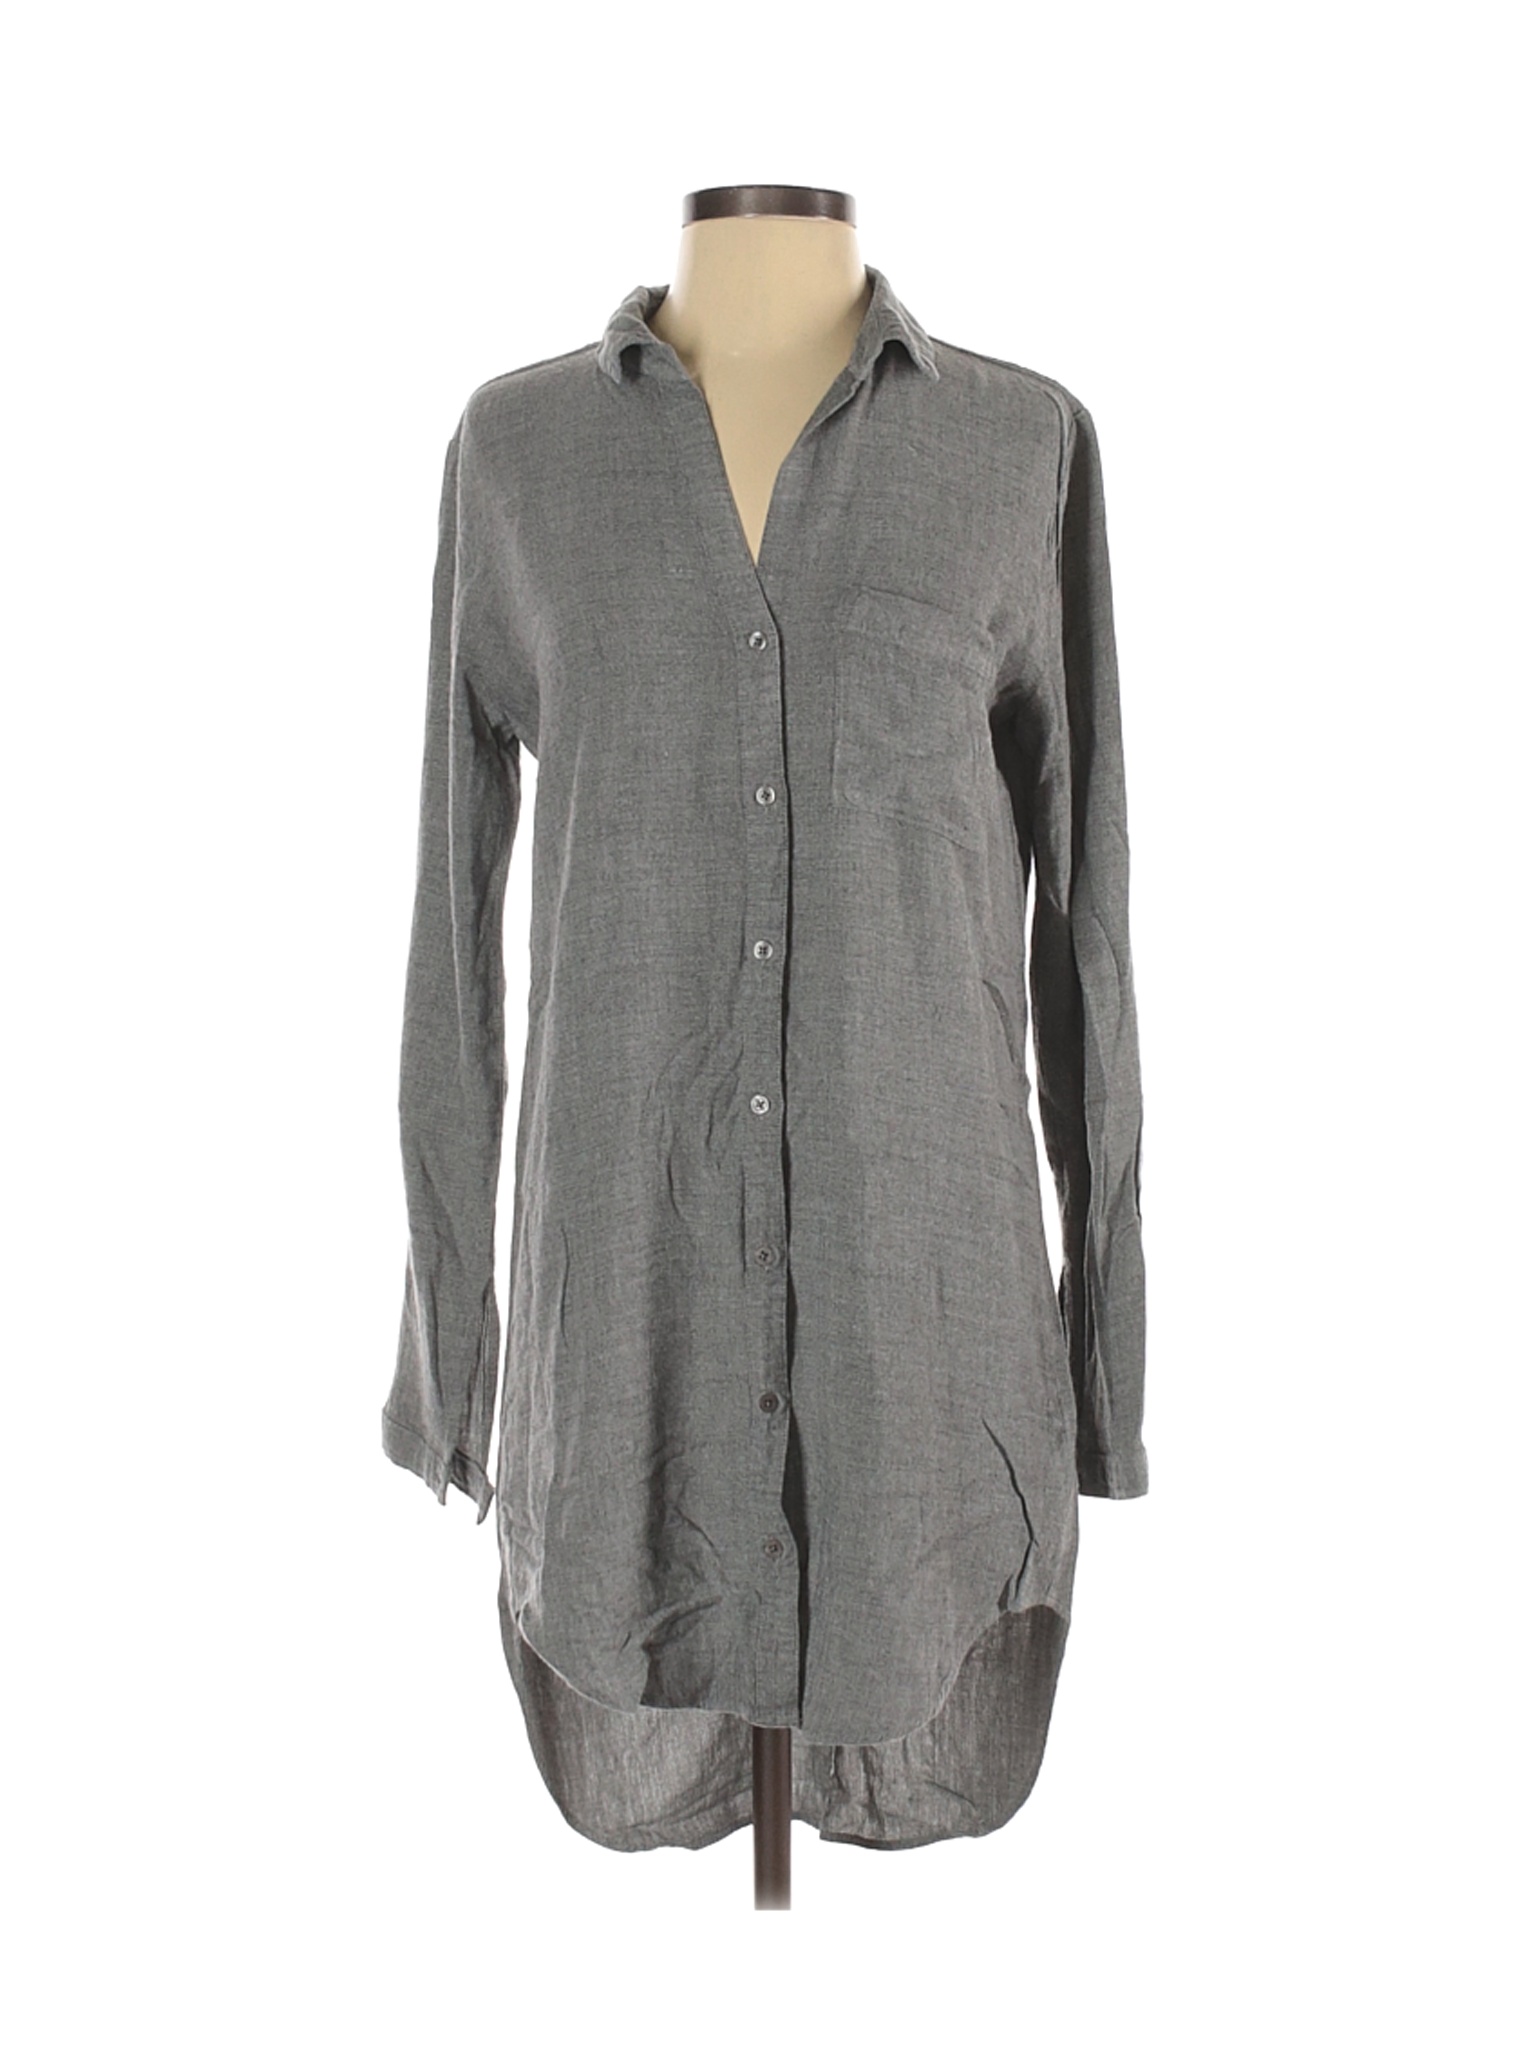 Cloth & Stone Women Gray Casual Dress S | eBay